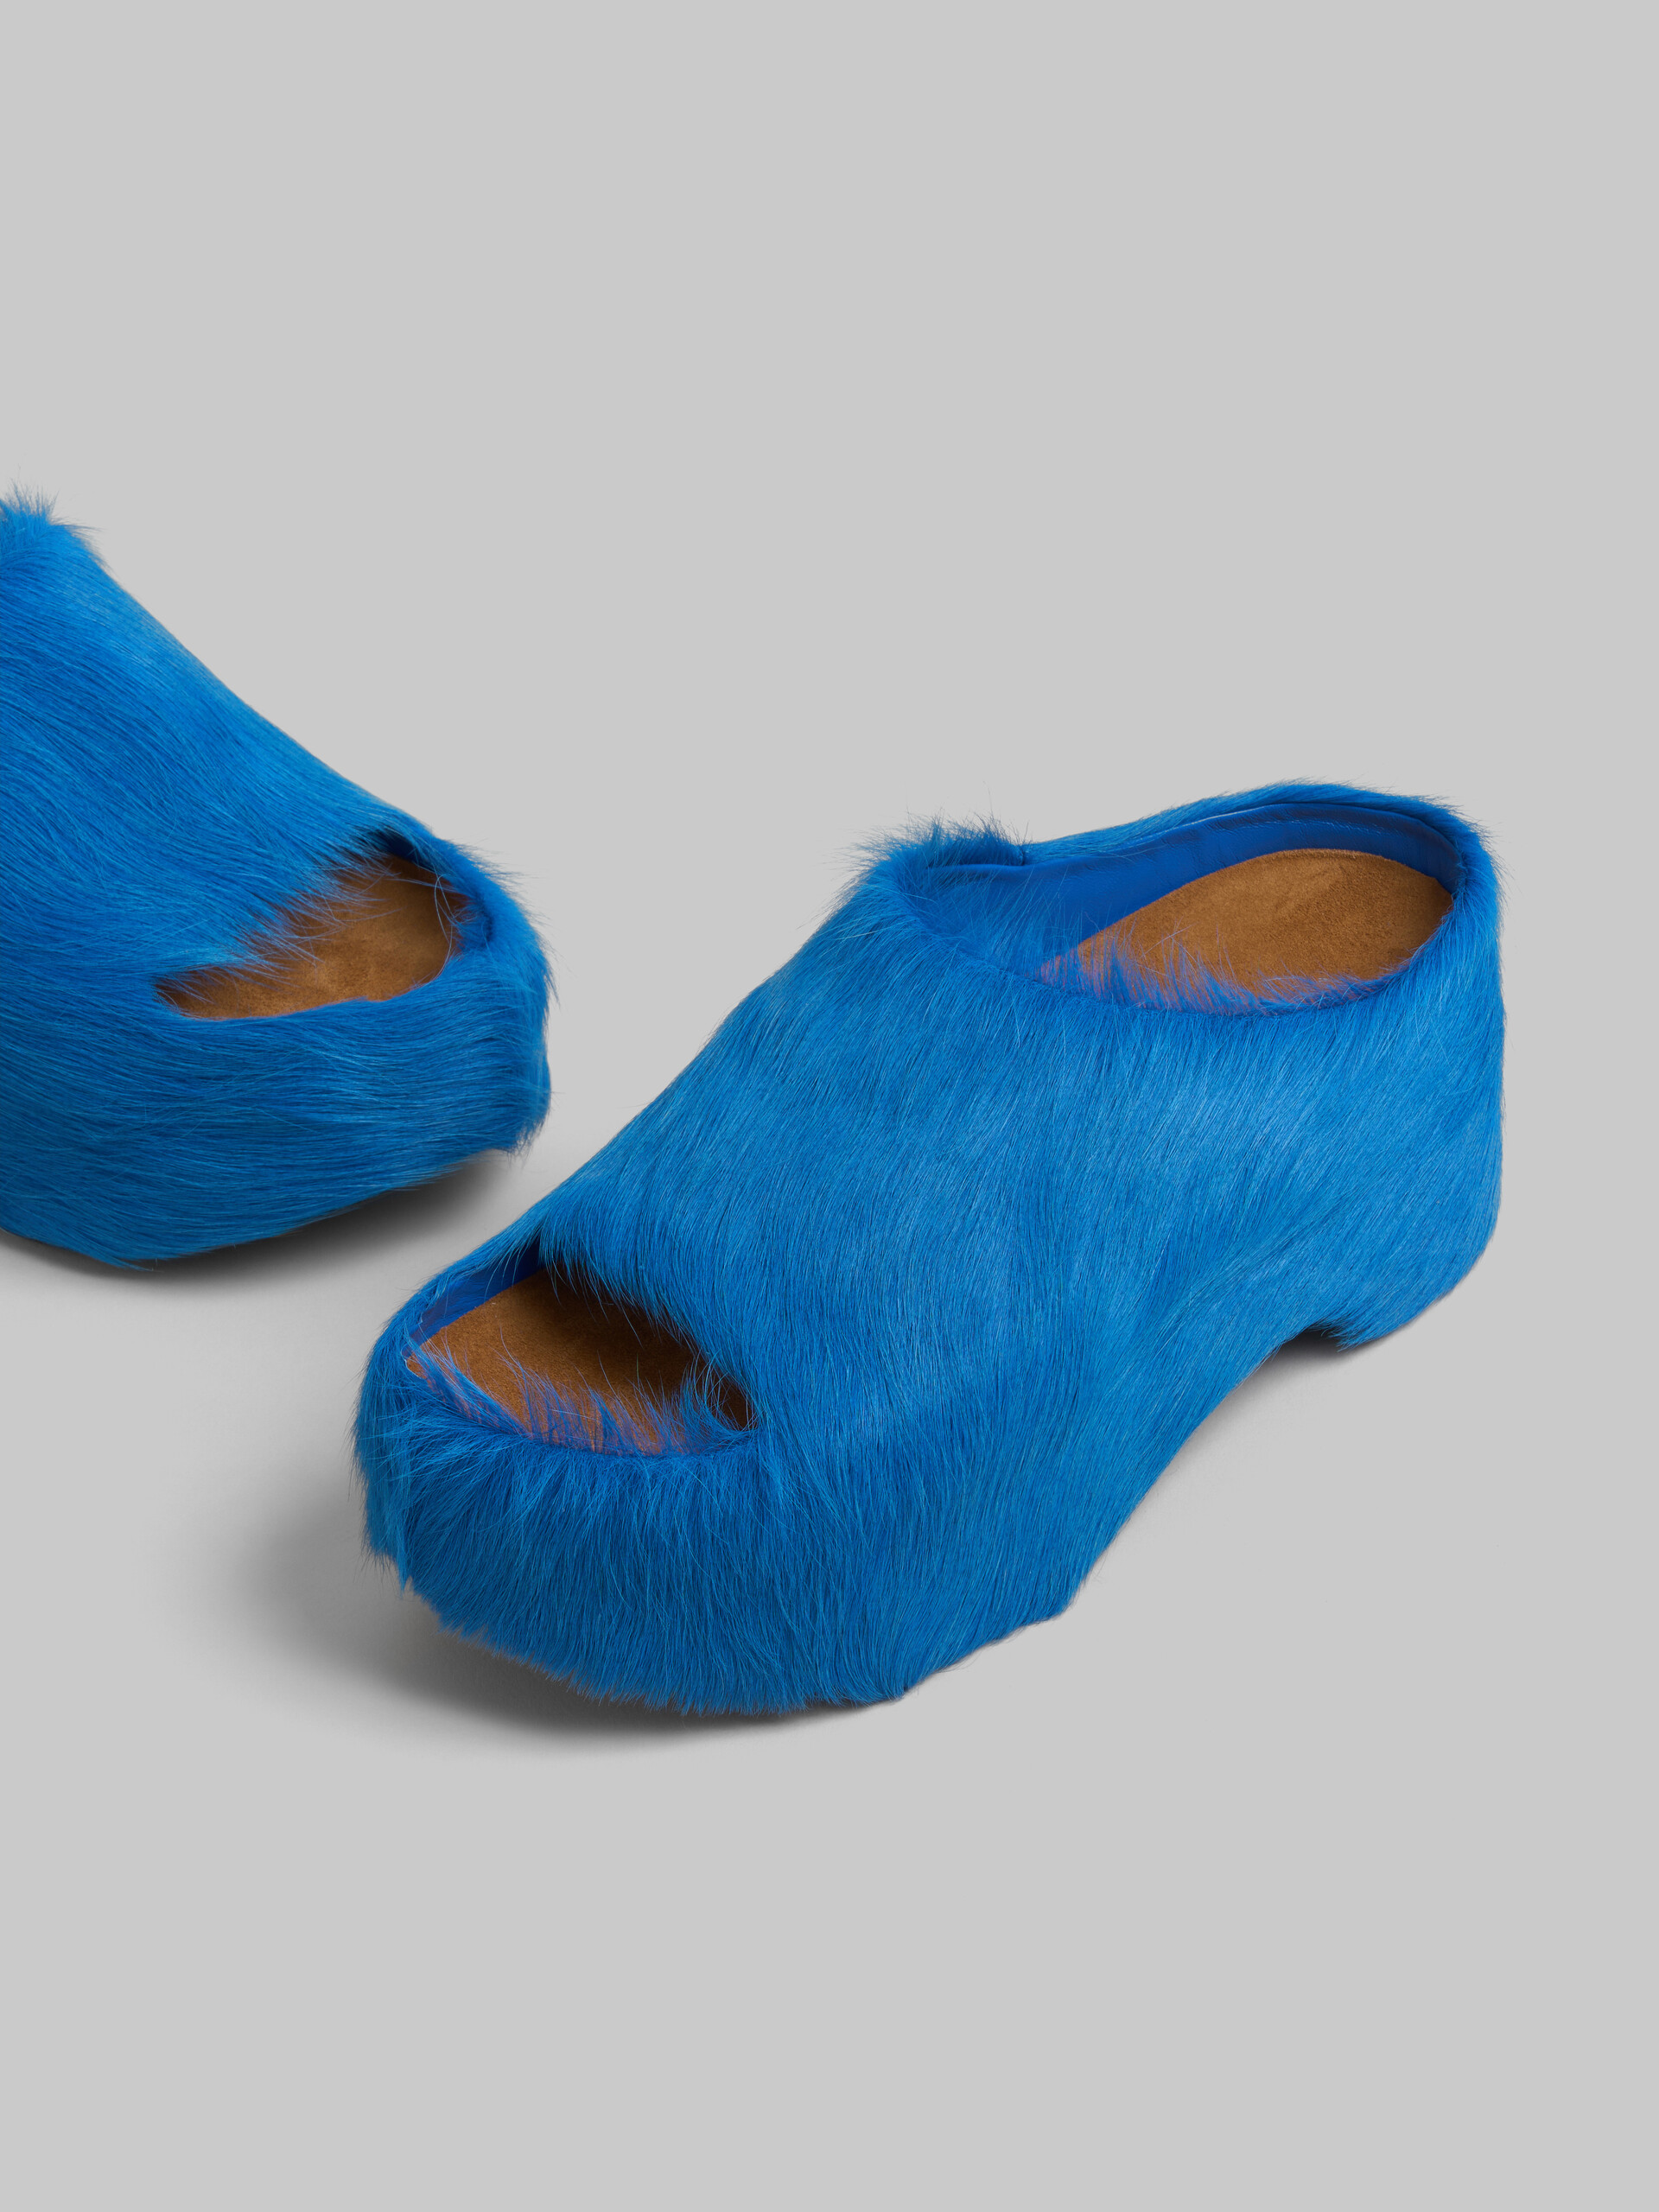 Chancla tipo zueco gruesa azul de piel de becerro de pelo largo - Sandalias - Image 5